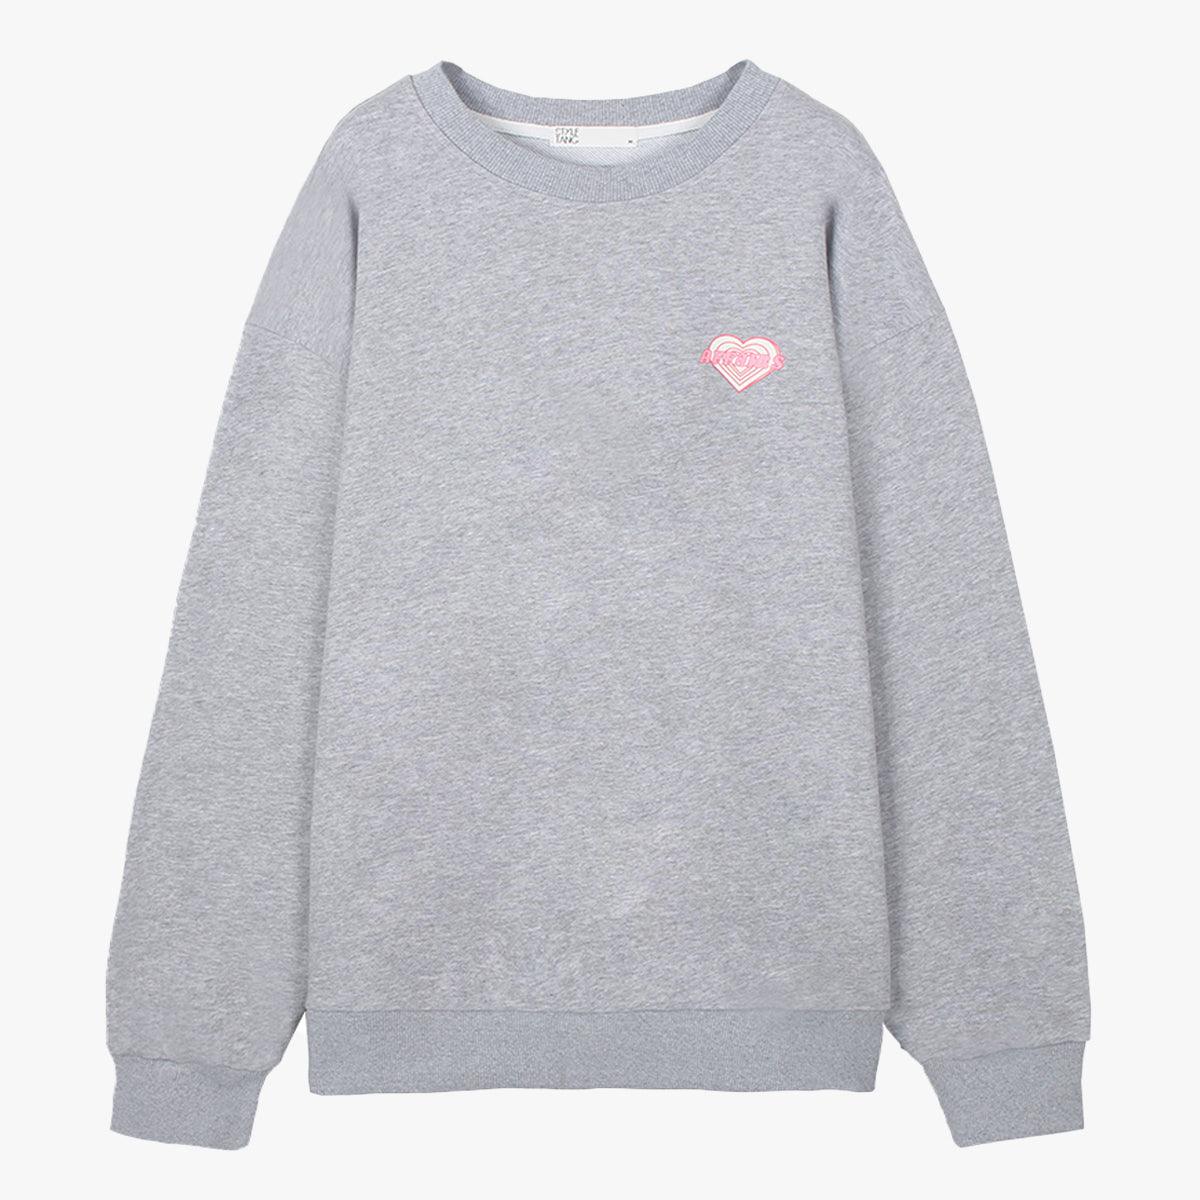 Love Affairs Light Gray Sweatshirt - Aesthetic Clothes Shop